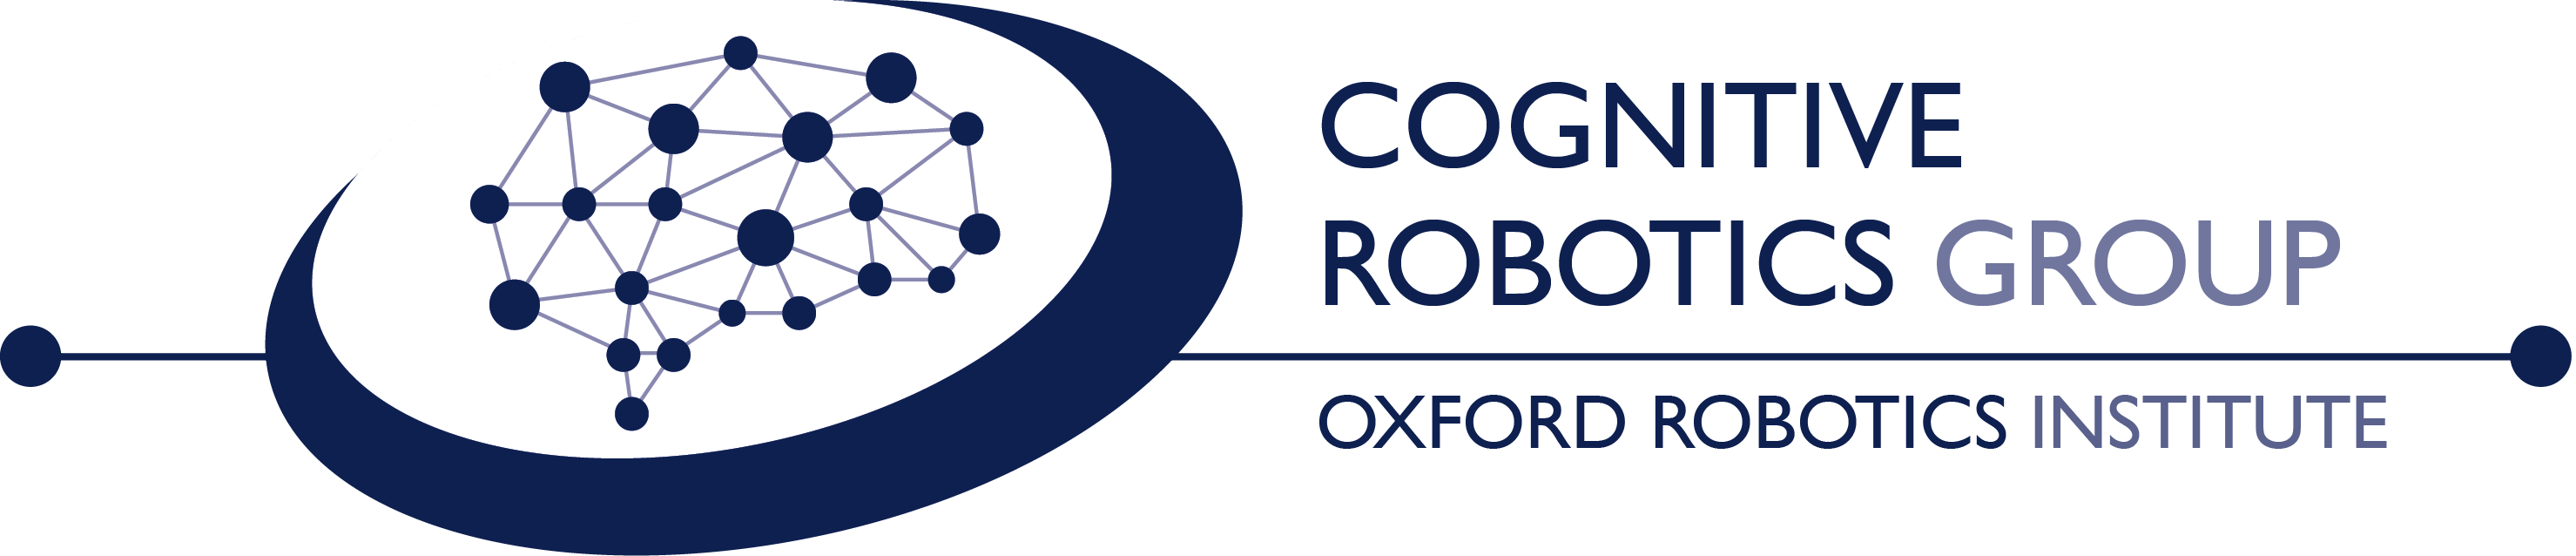 Cognitive Robotics Group oval logo. 